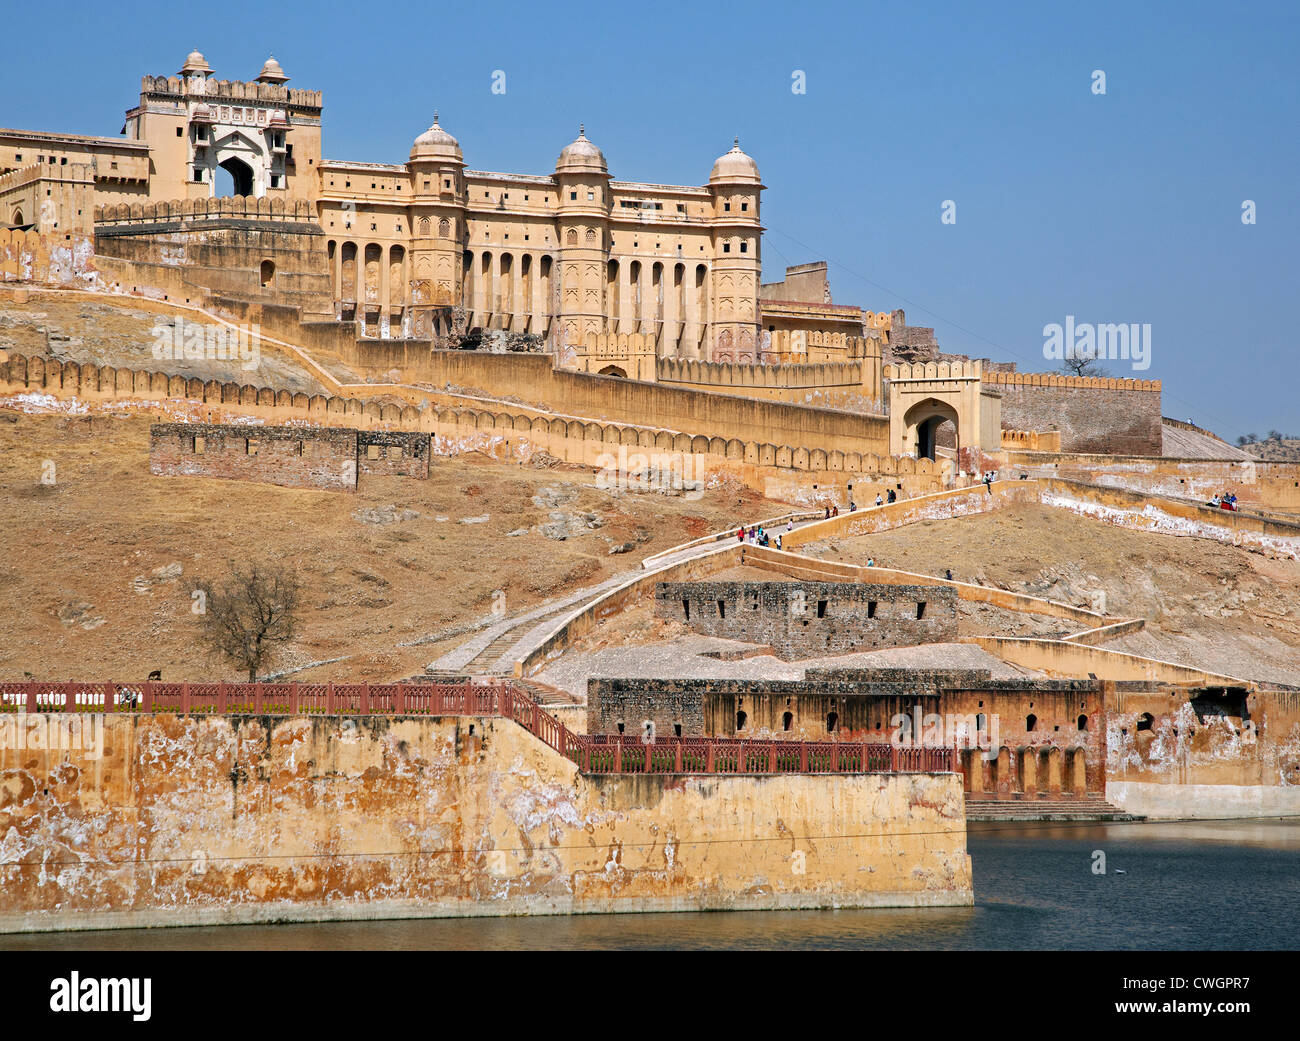 Fuerte Amer / Fuerte Amber, palacio de arenisca roja en Amer cerca de Jaipur, Rajasthan, India Foto de stock